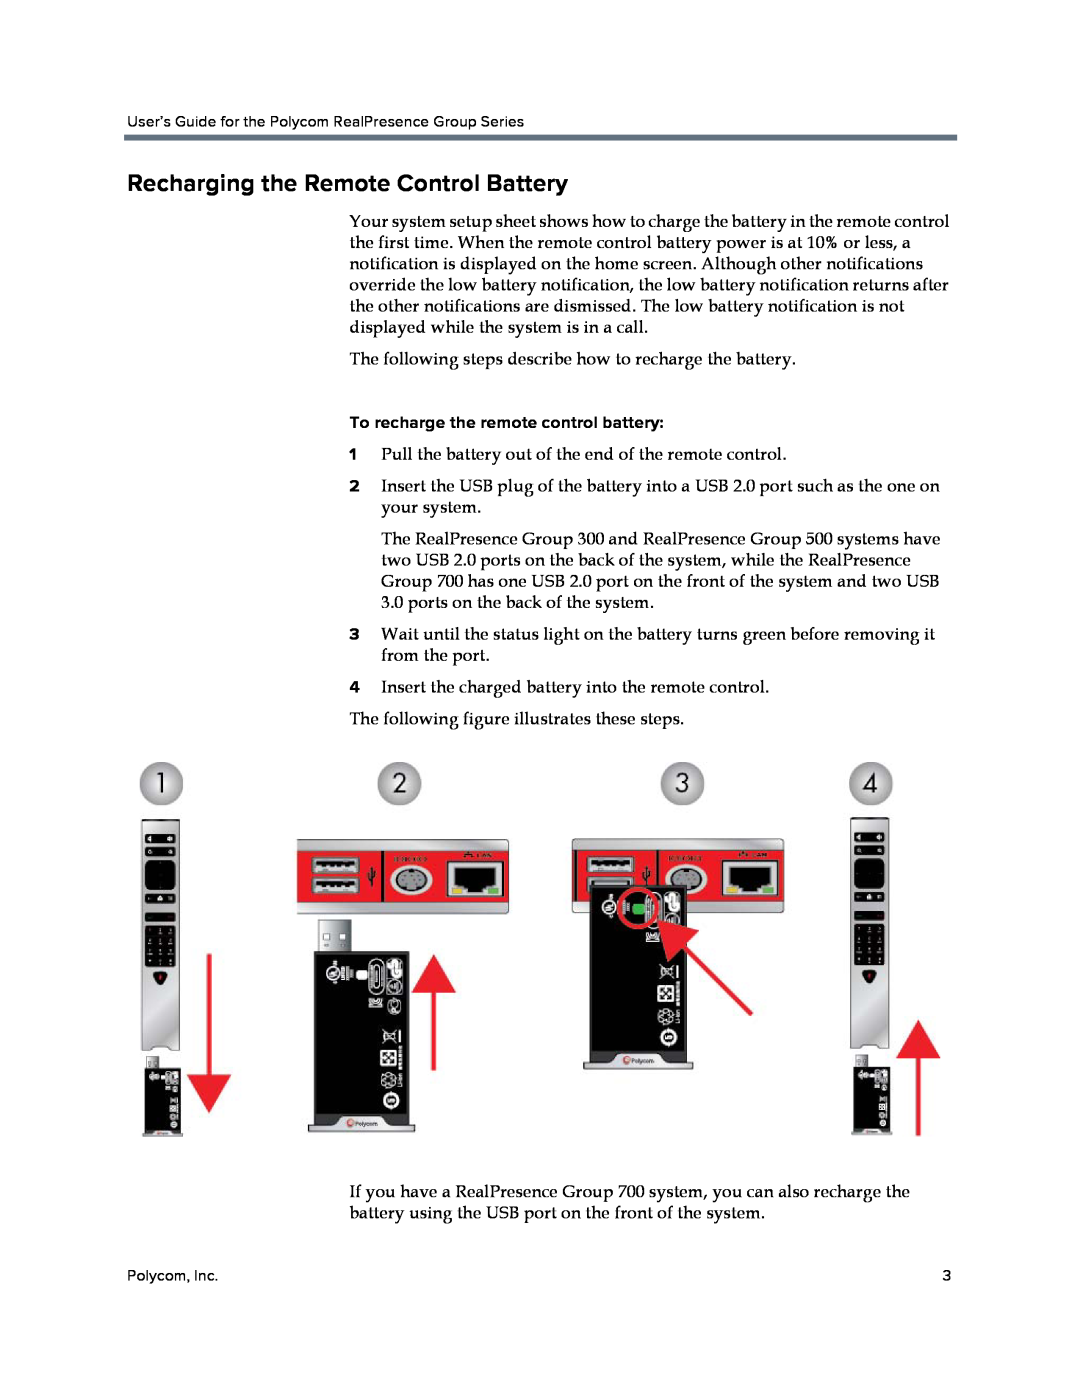 Polycom P001 manual Recharging the Remote Control Battery, To recharge the remote control battery 